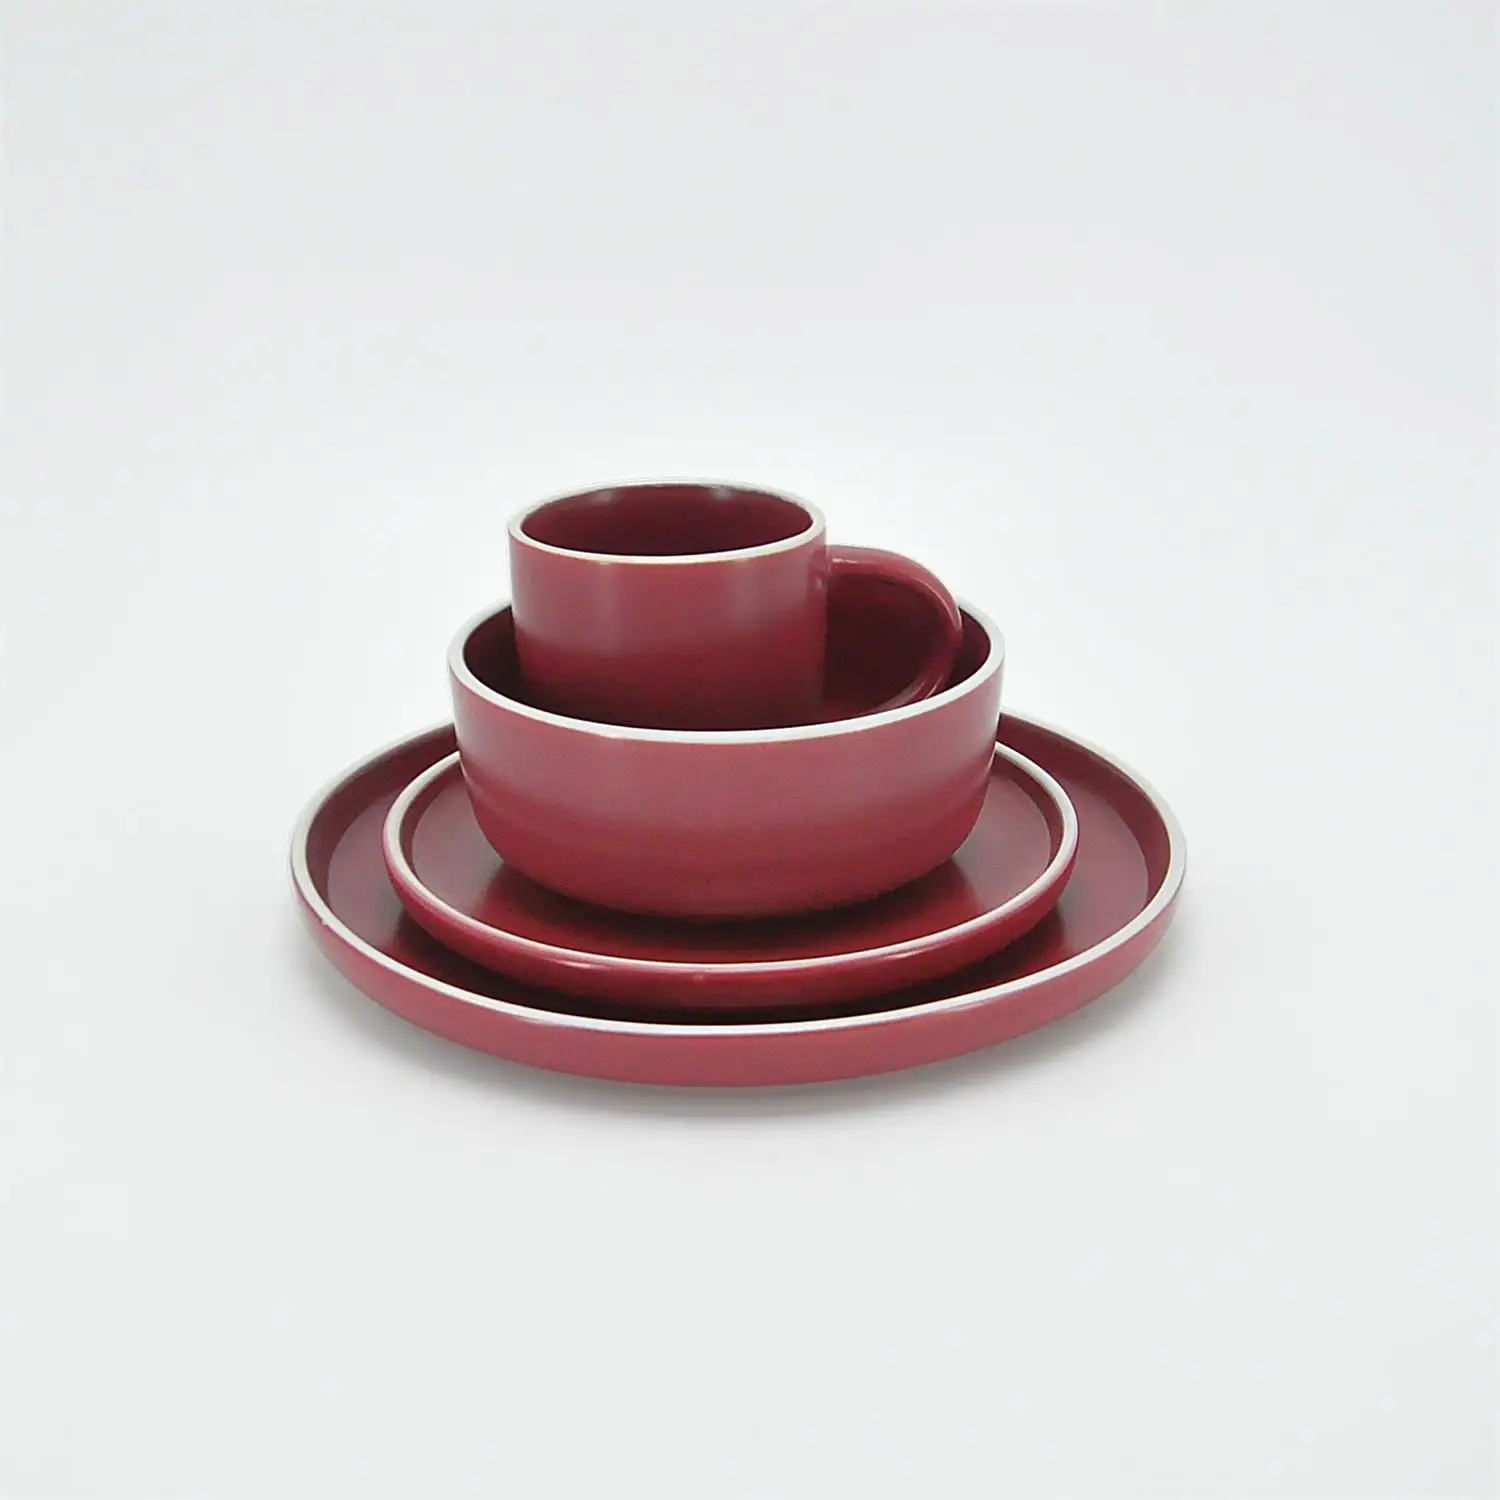 Dishwasher safe ceramic set dinnerware color glazed matte ceramic dinnerware ceramic tableware with white edges